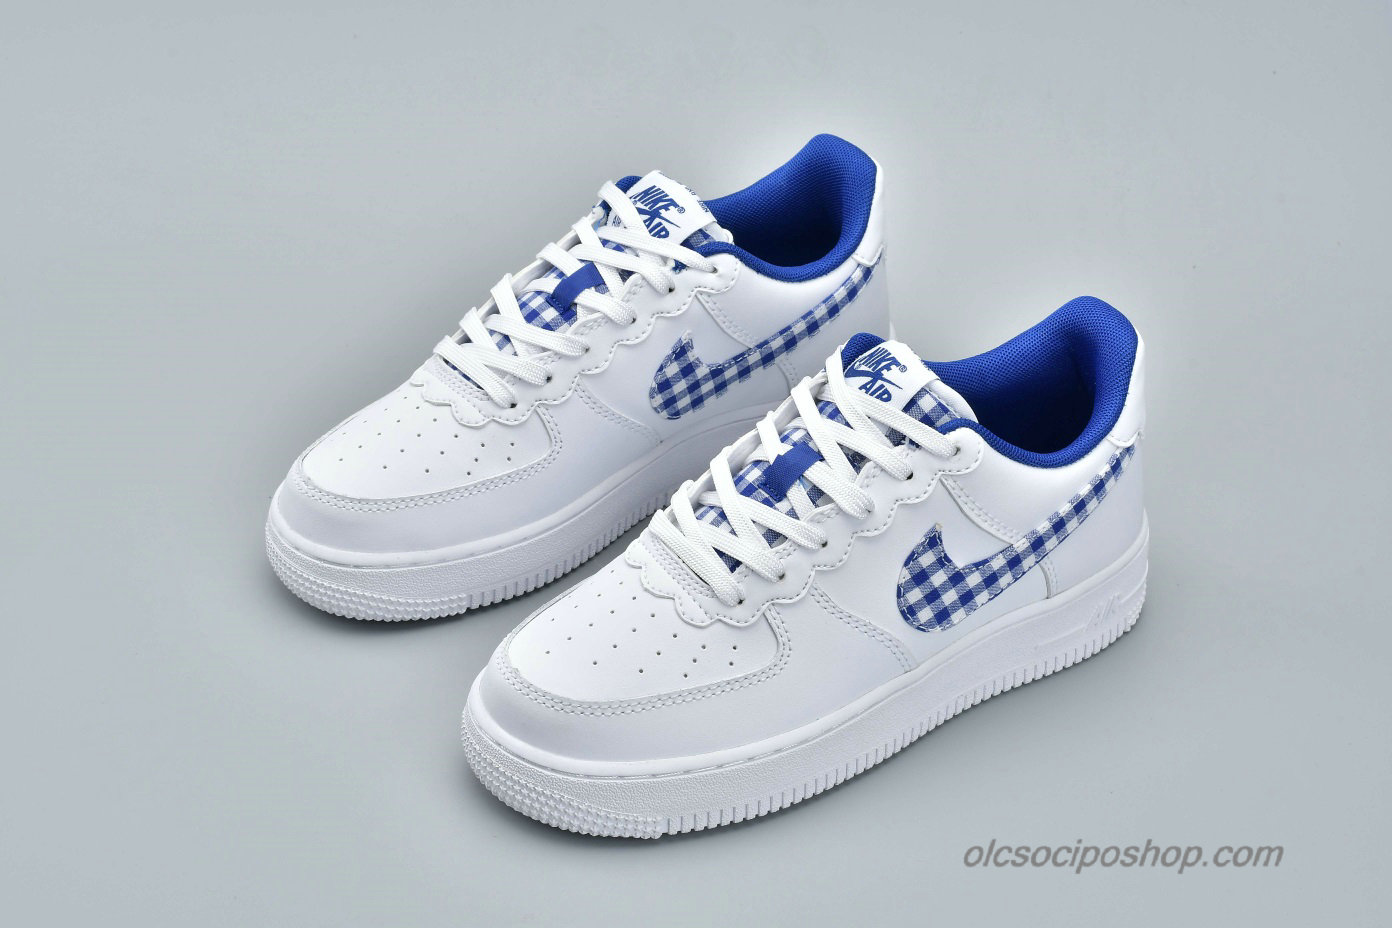 Nike Air Force 1 Low QS Fehér/Kék Cipők (AV6232-100)